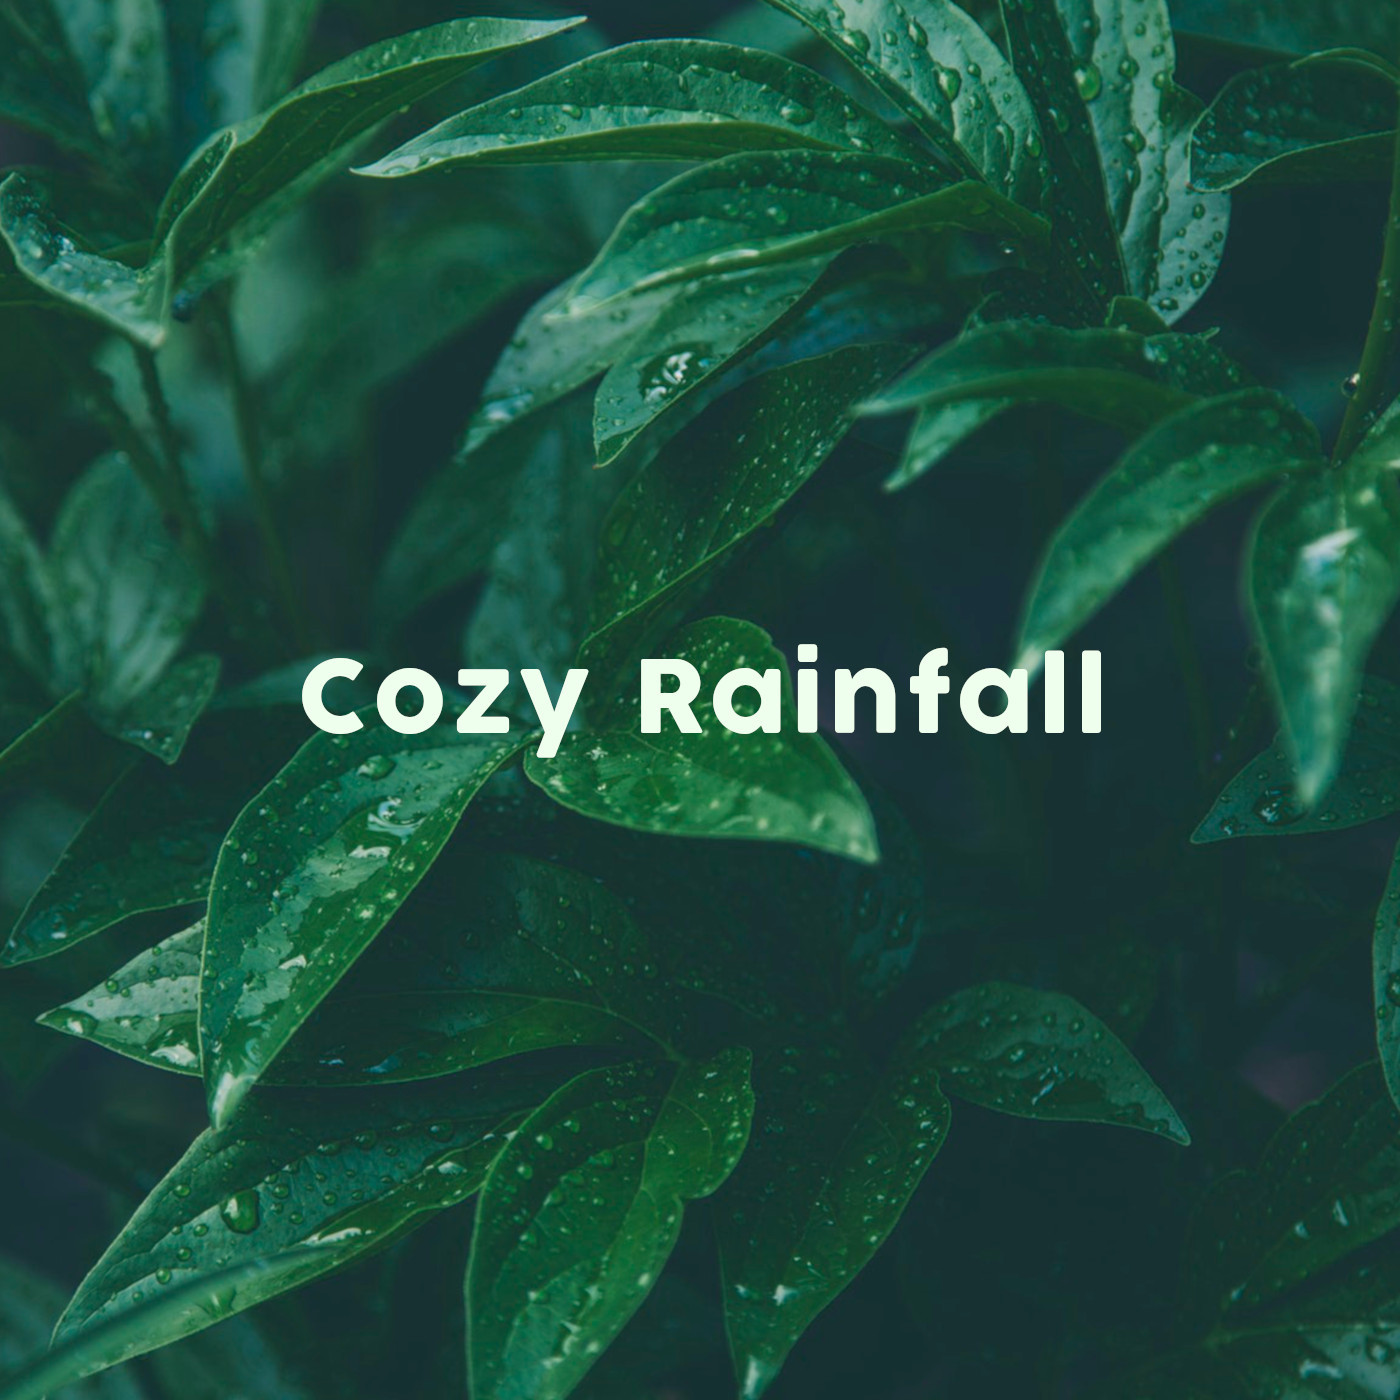 Cozy Rainfall